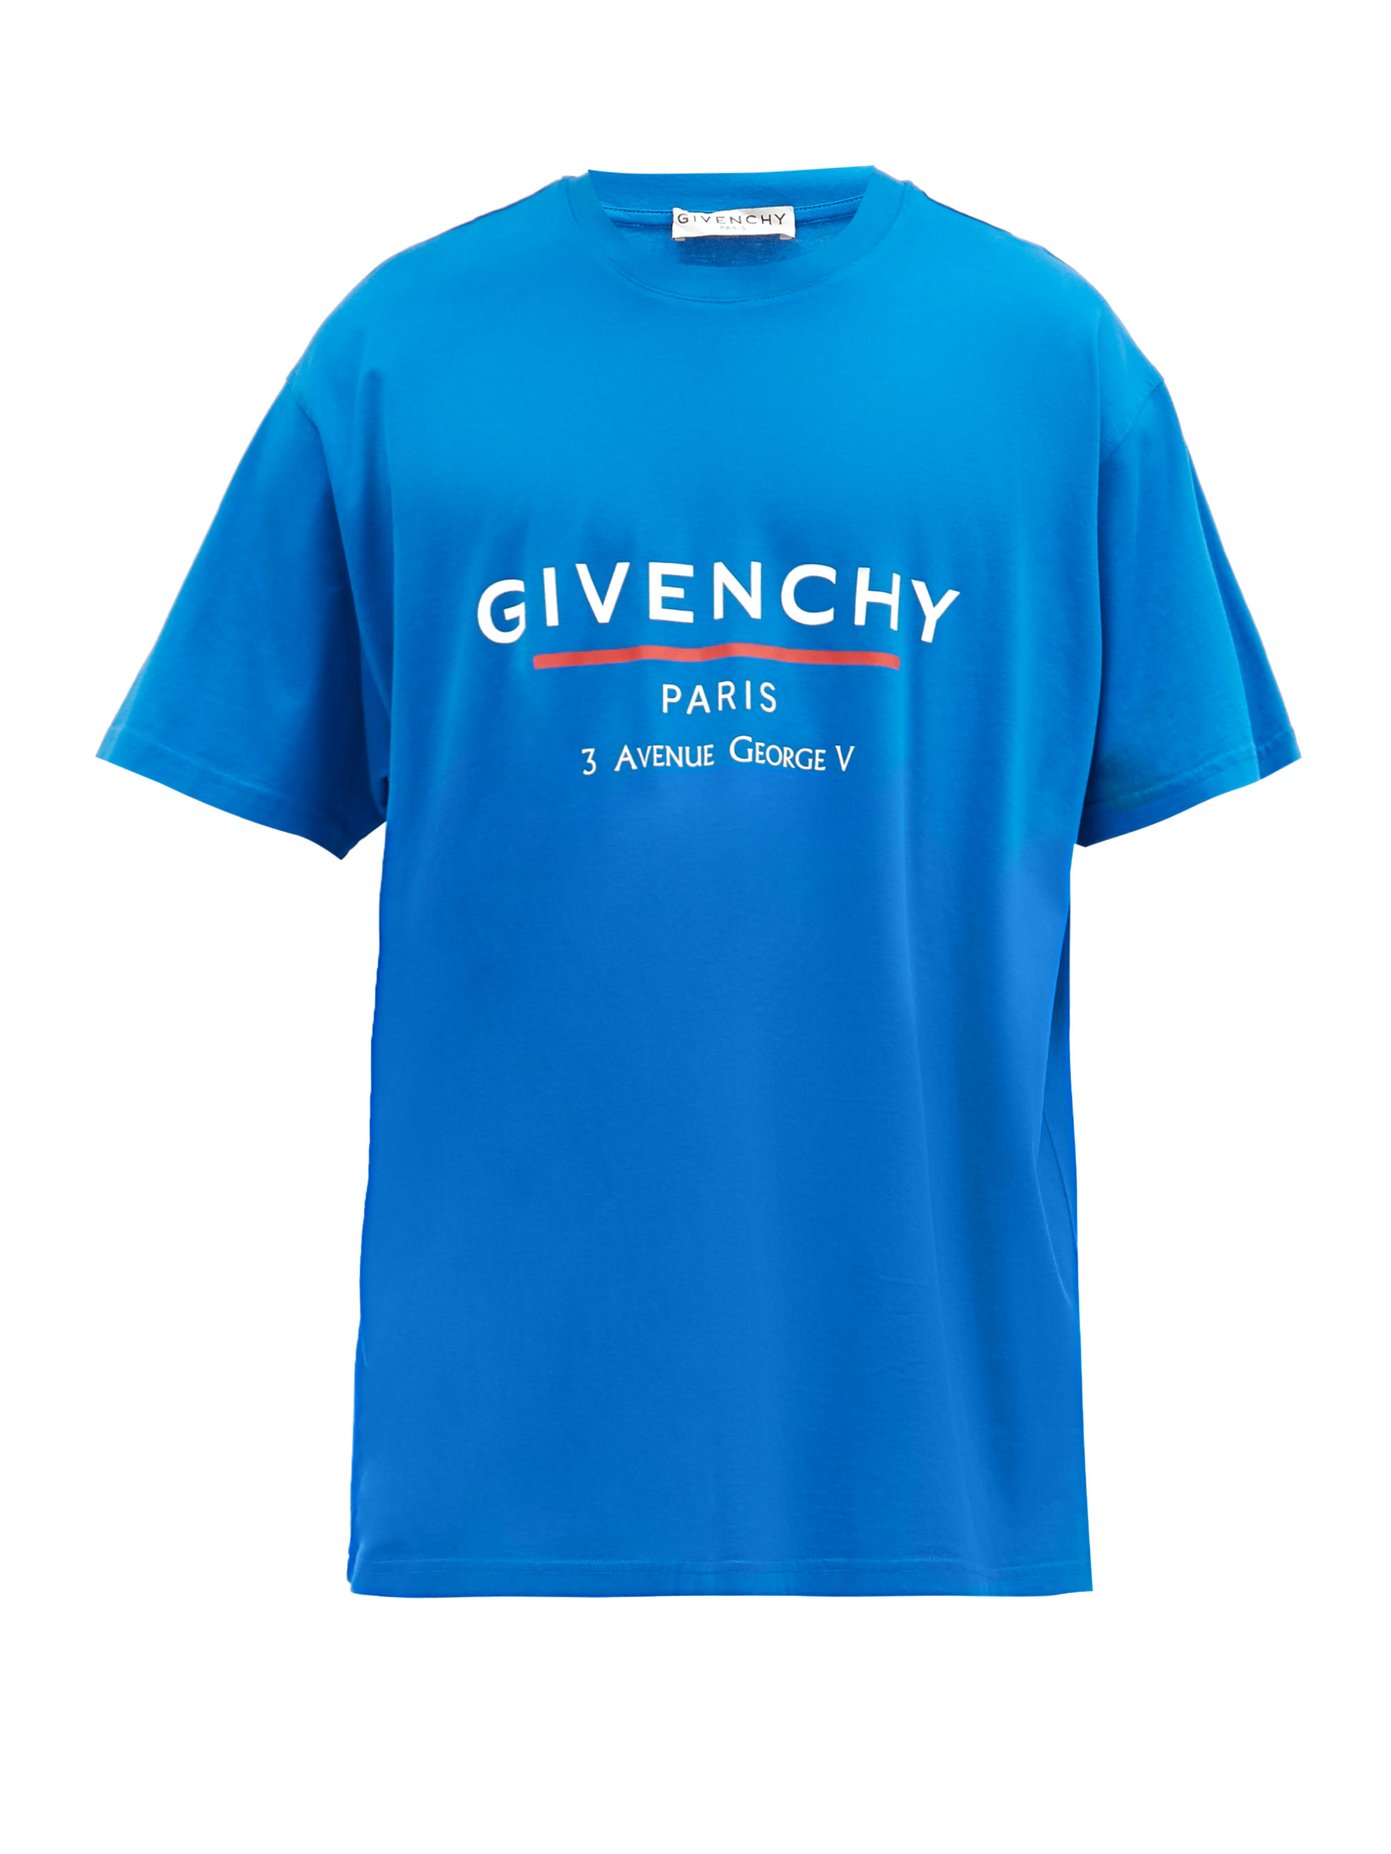 givenchy shirt blue